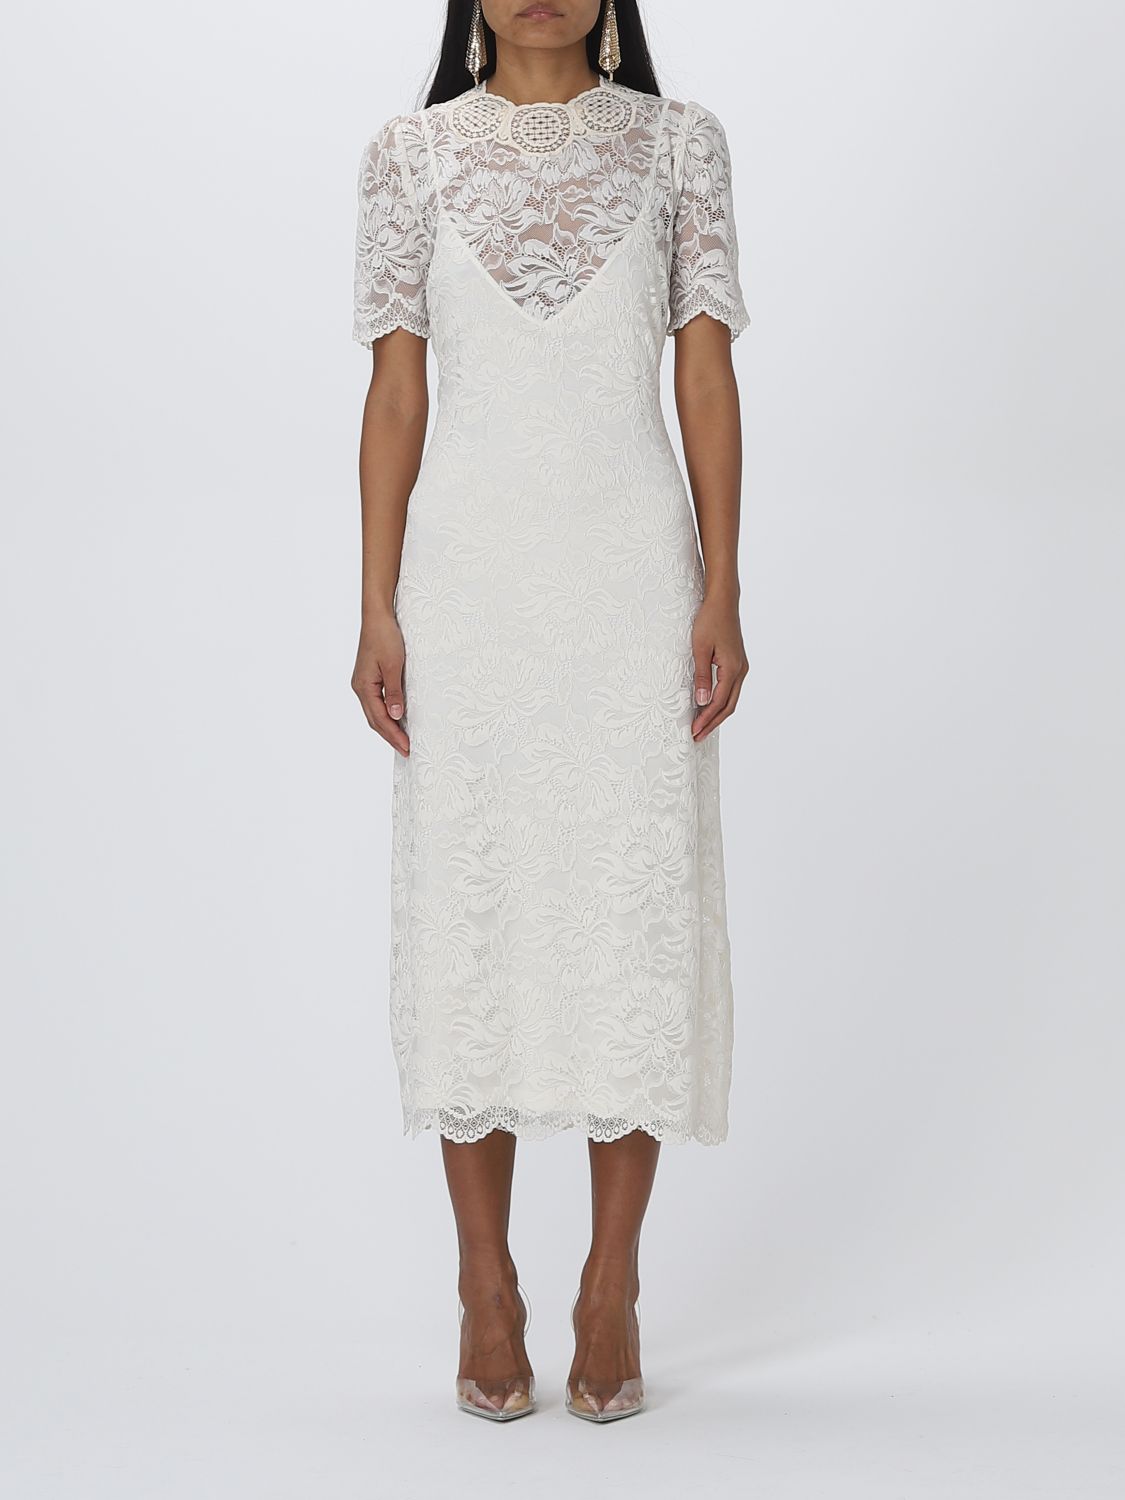 PACO RABANNE: dress for women - White | Paco Rabanne dress ...